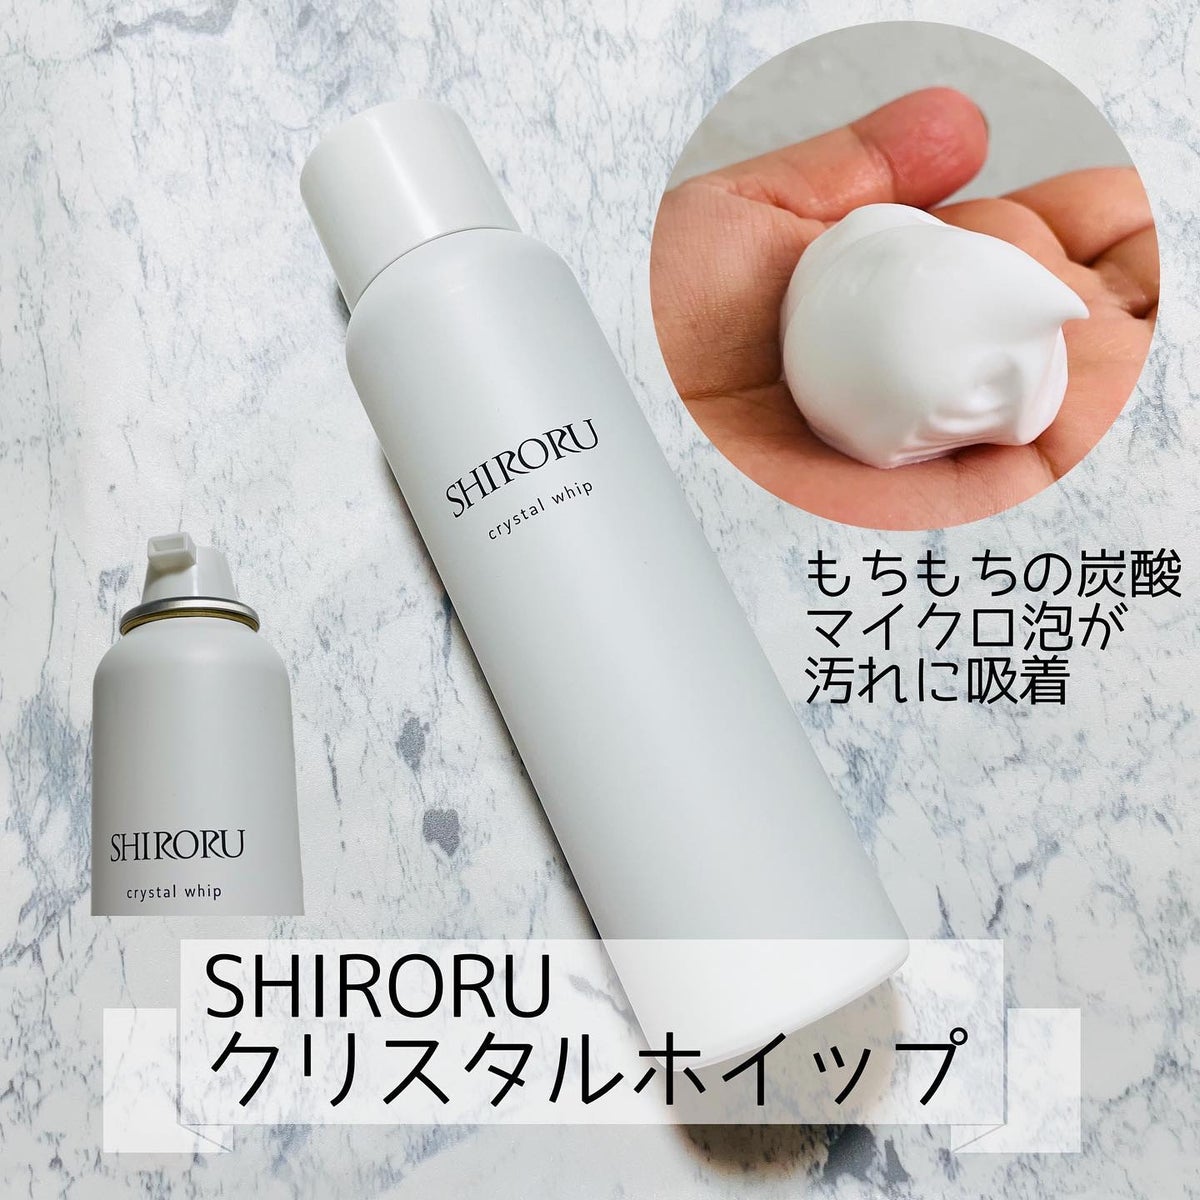 SHIRORU 炭酸泡洗顔クリスタルホイップ - 洗顔料